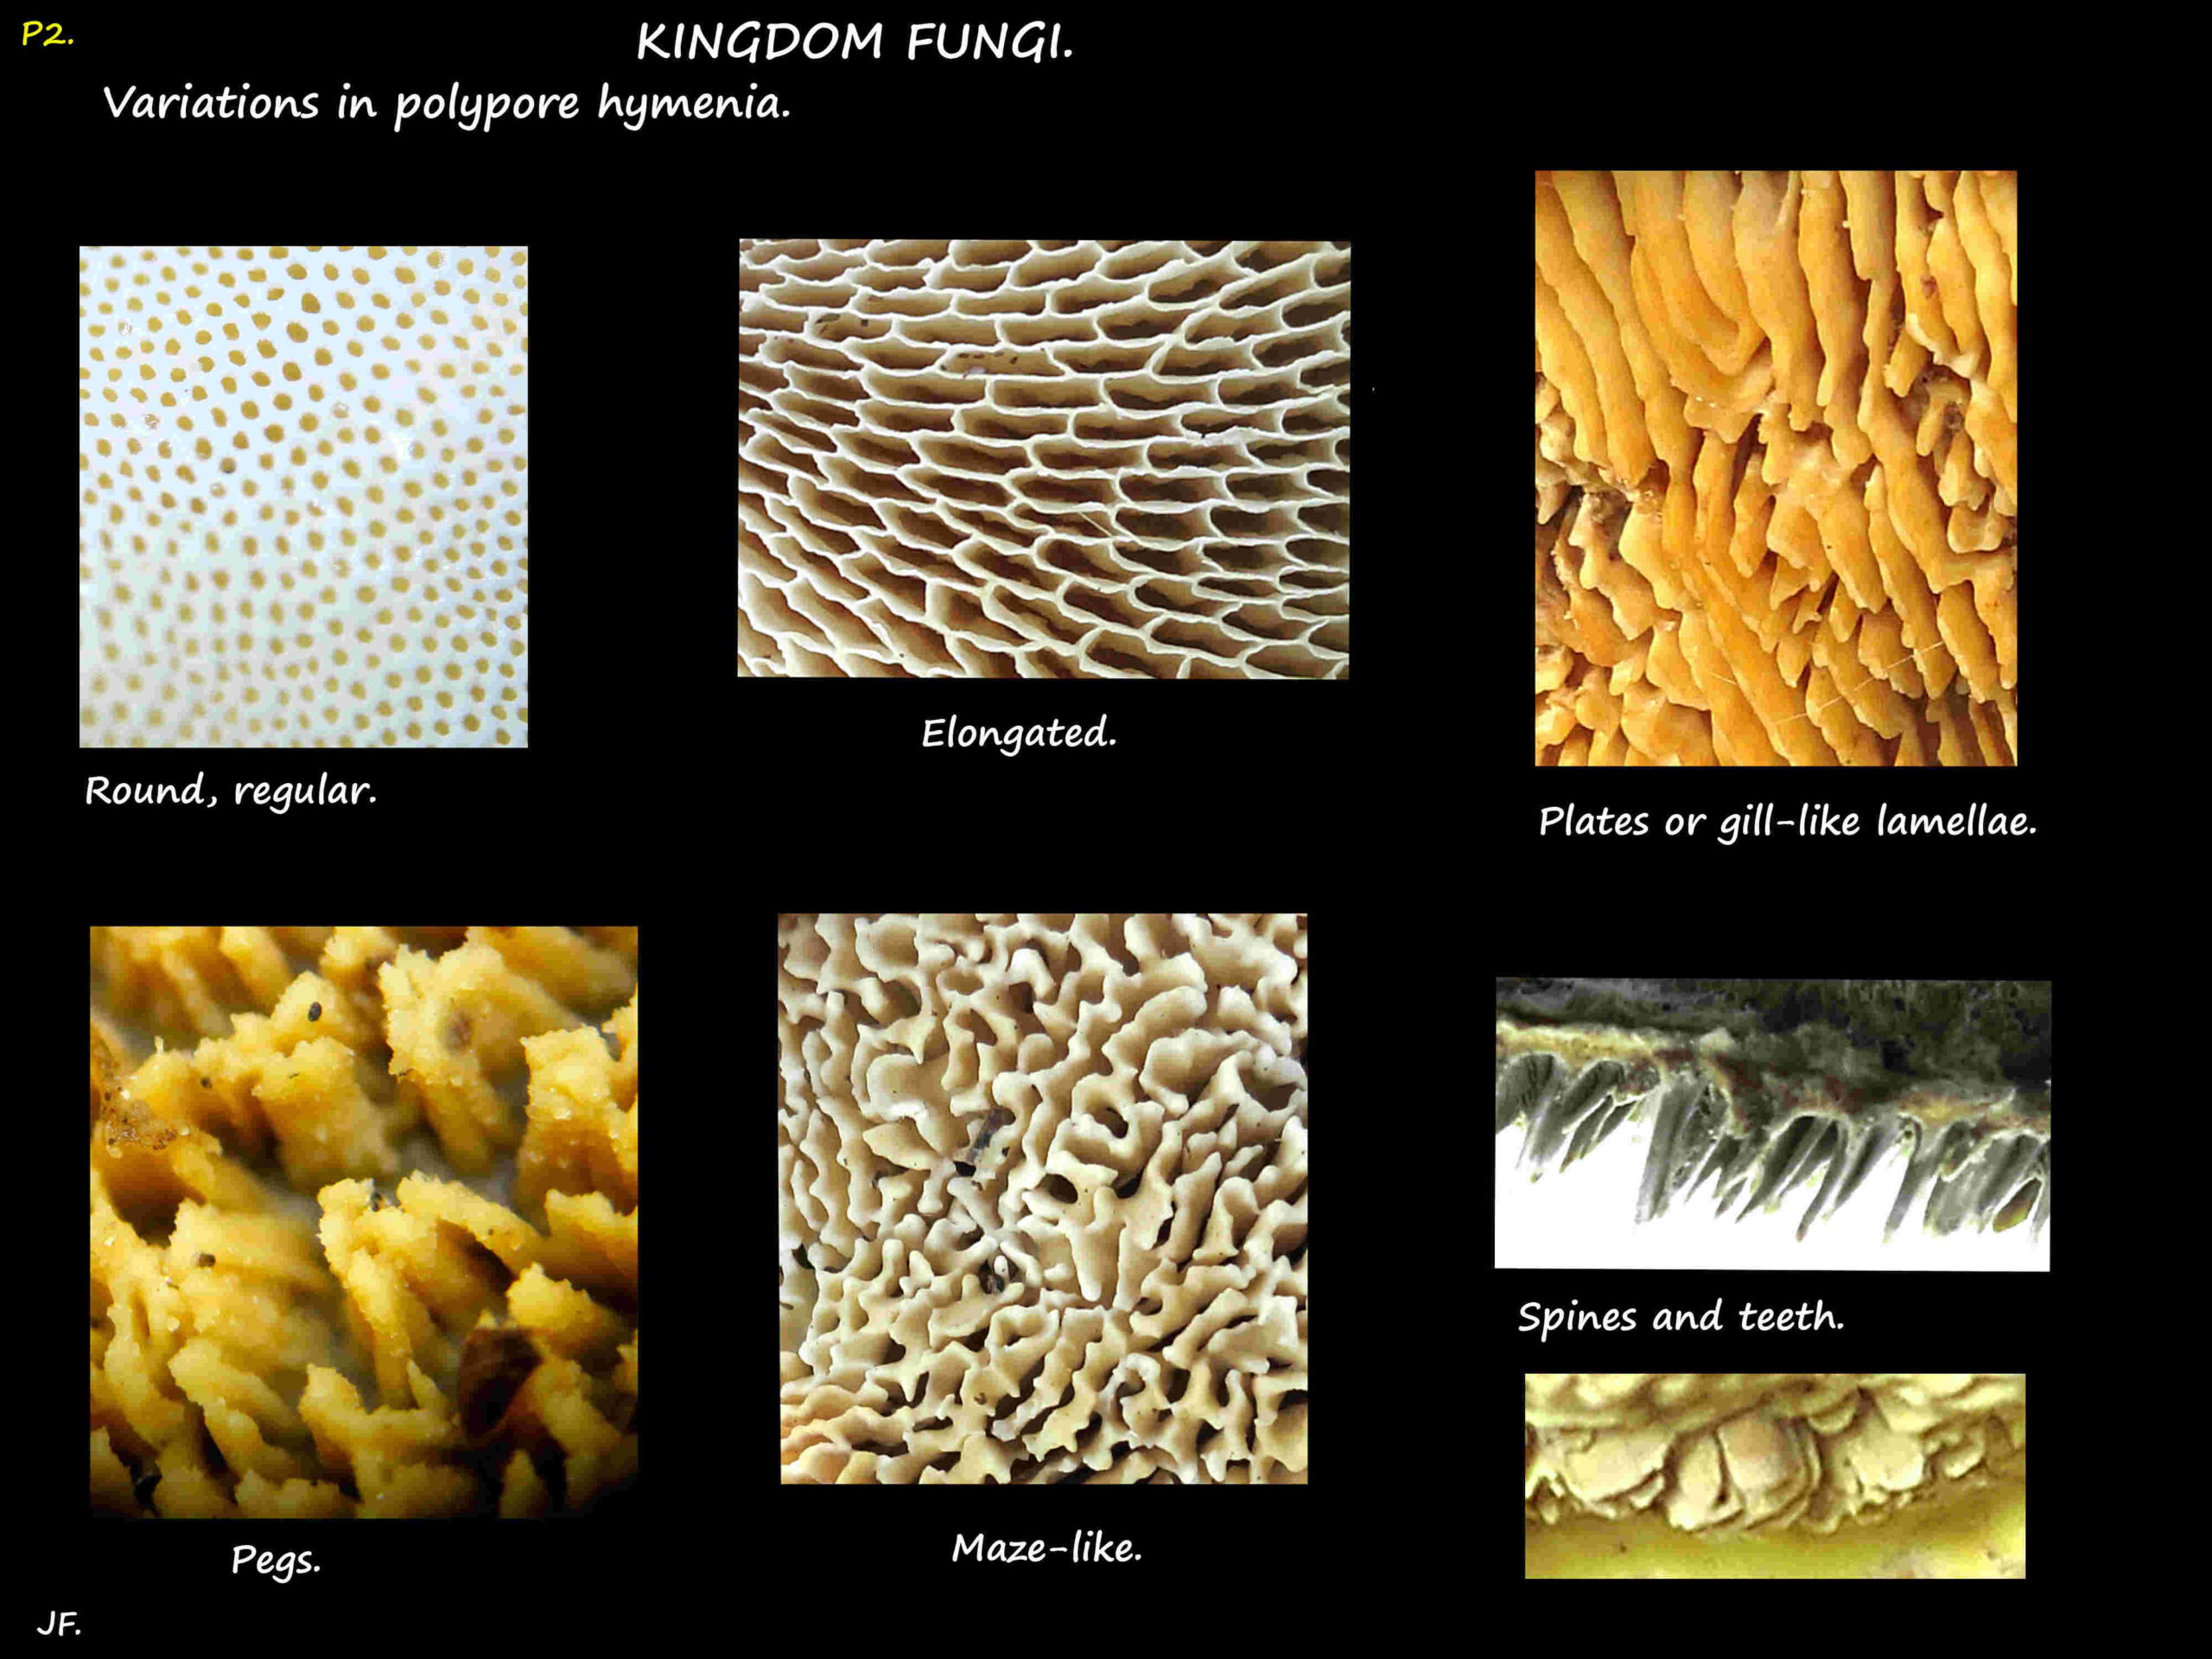 1 Types of hymenia in Polypore mushrooms